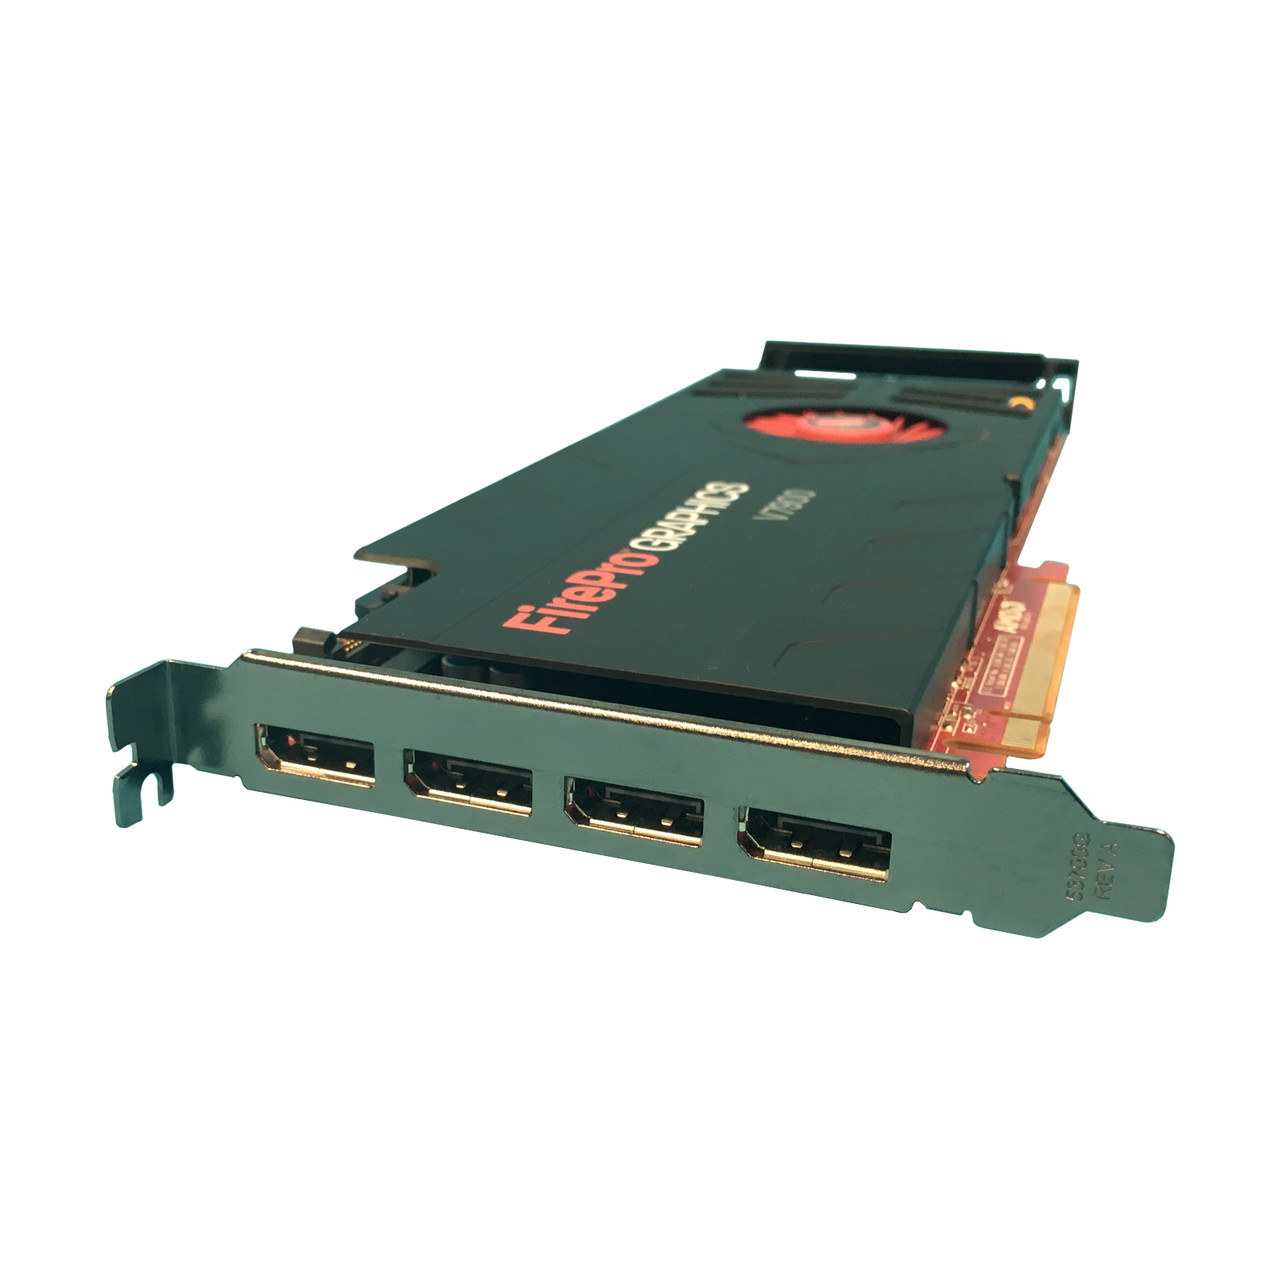 Sapphire AMD FirePro V7900 2GB GDDR5 Quad DP PCI-Express Graphics Card  Grap｜グラフィックボード、ビデオカード